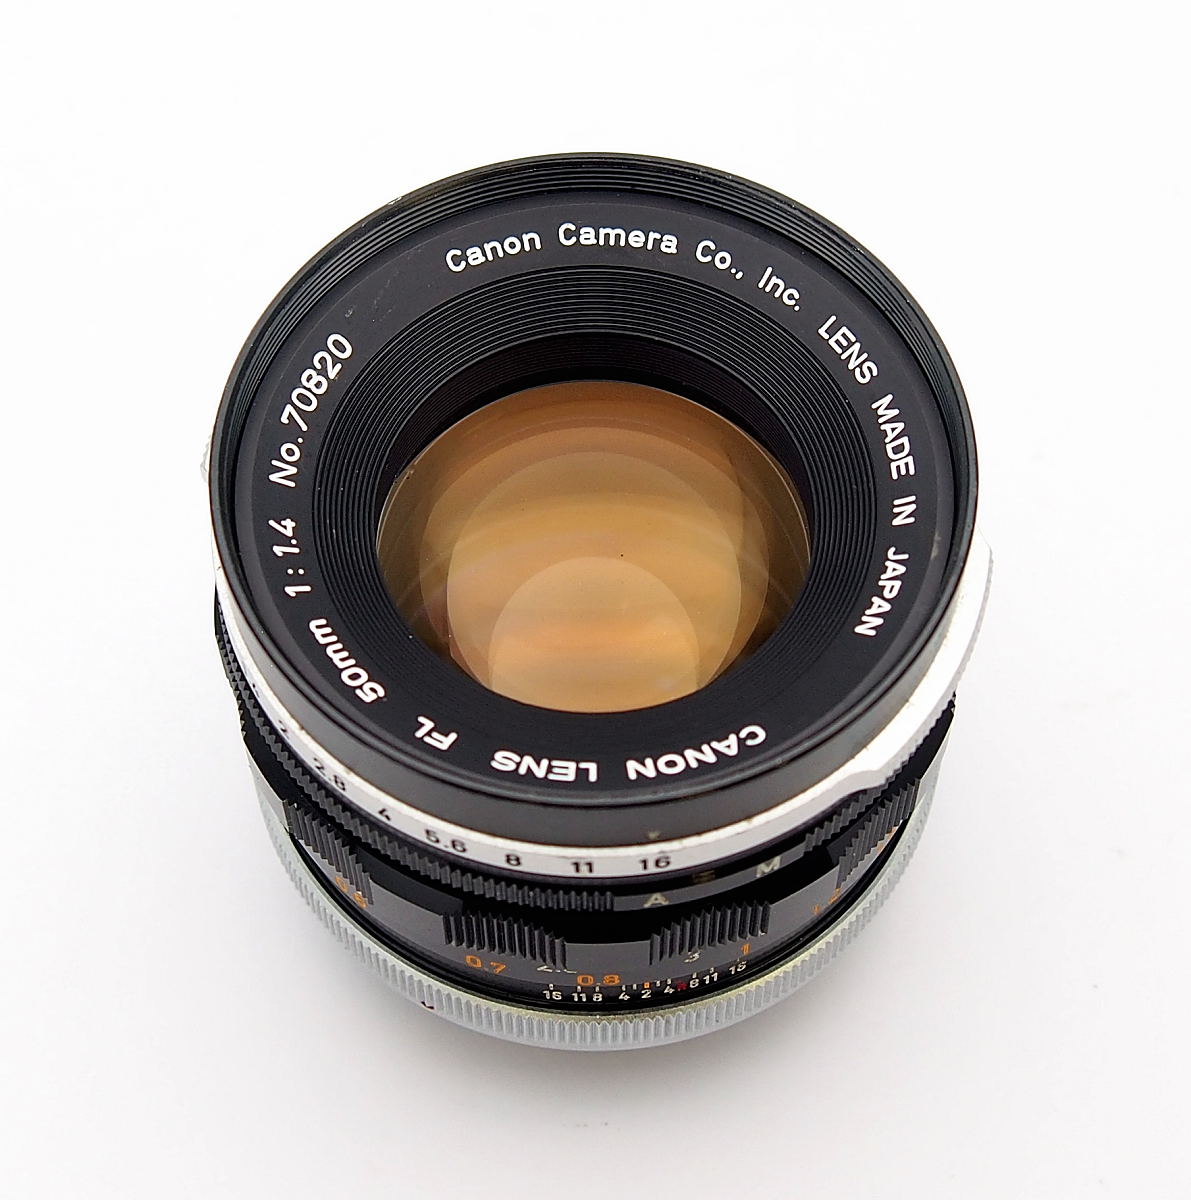 Canon 50mm F1.4 FL Standard Lens #9702